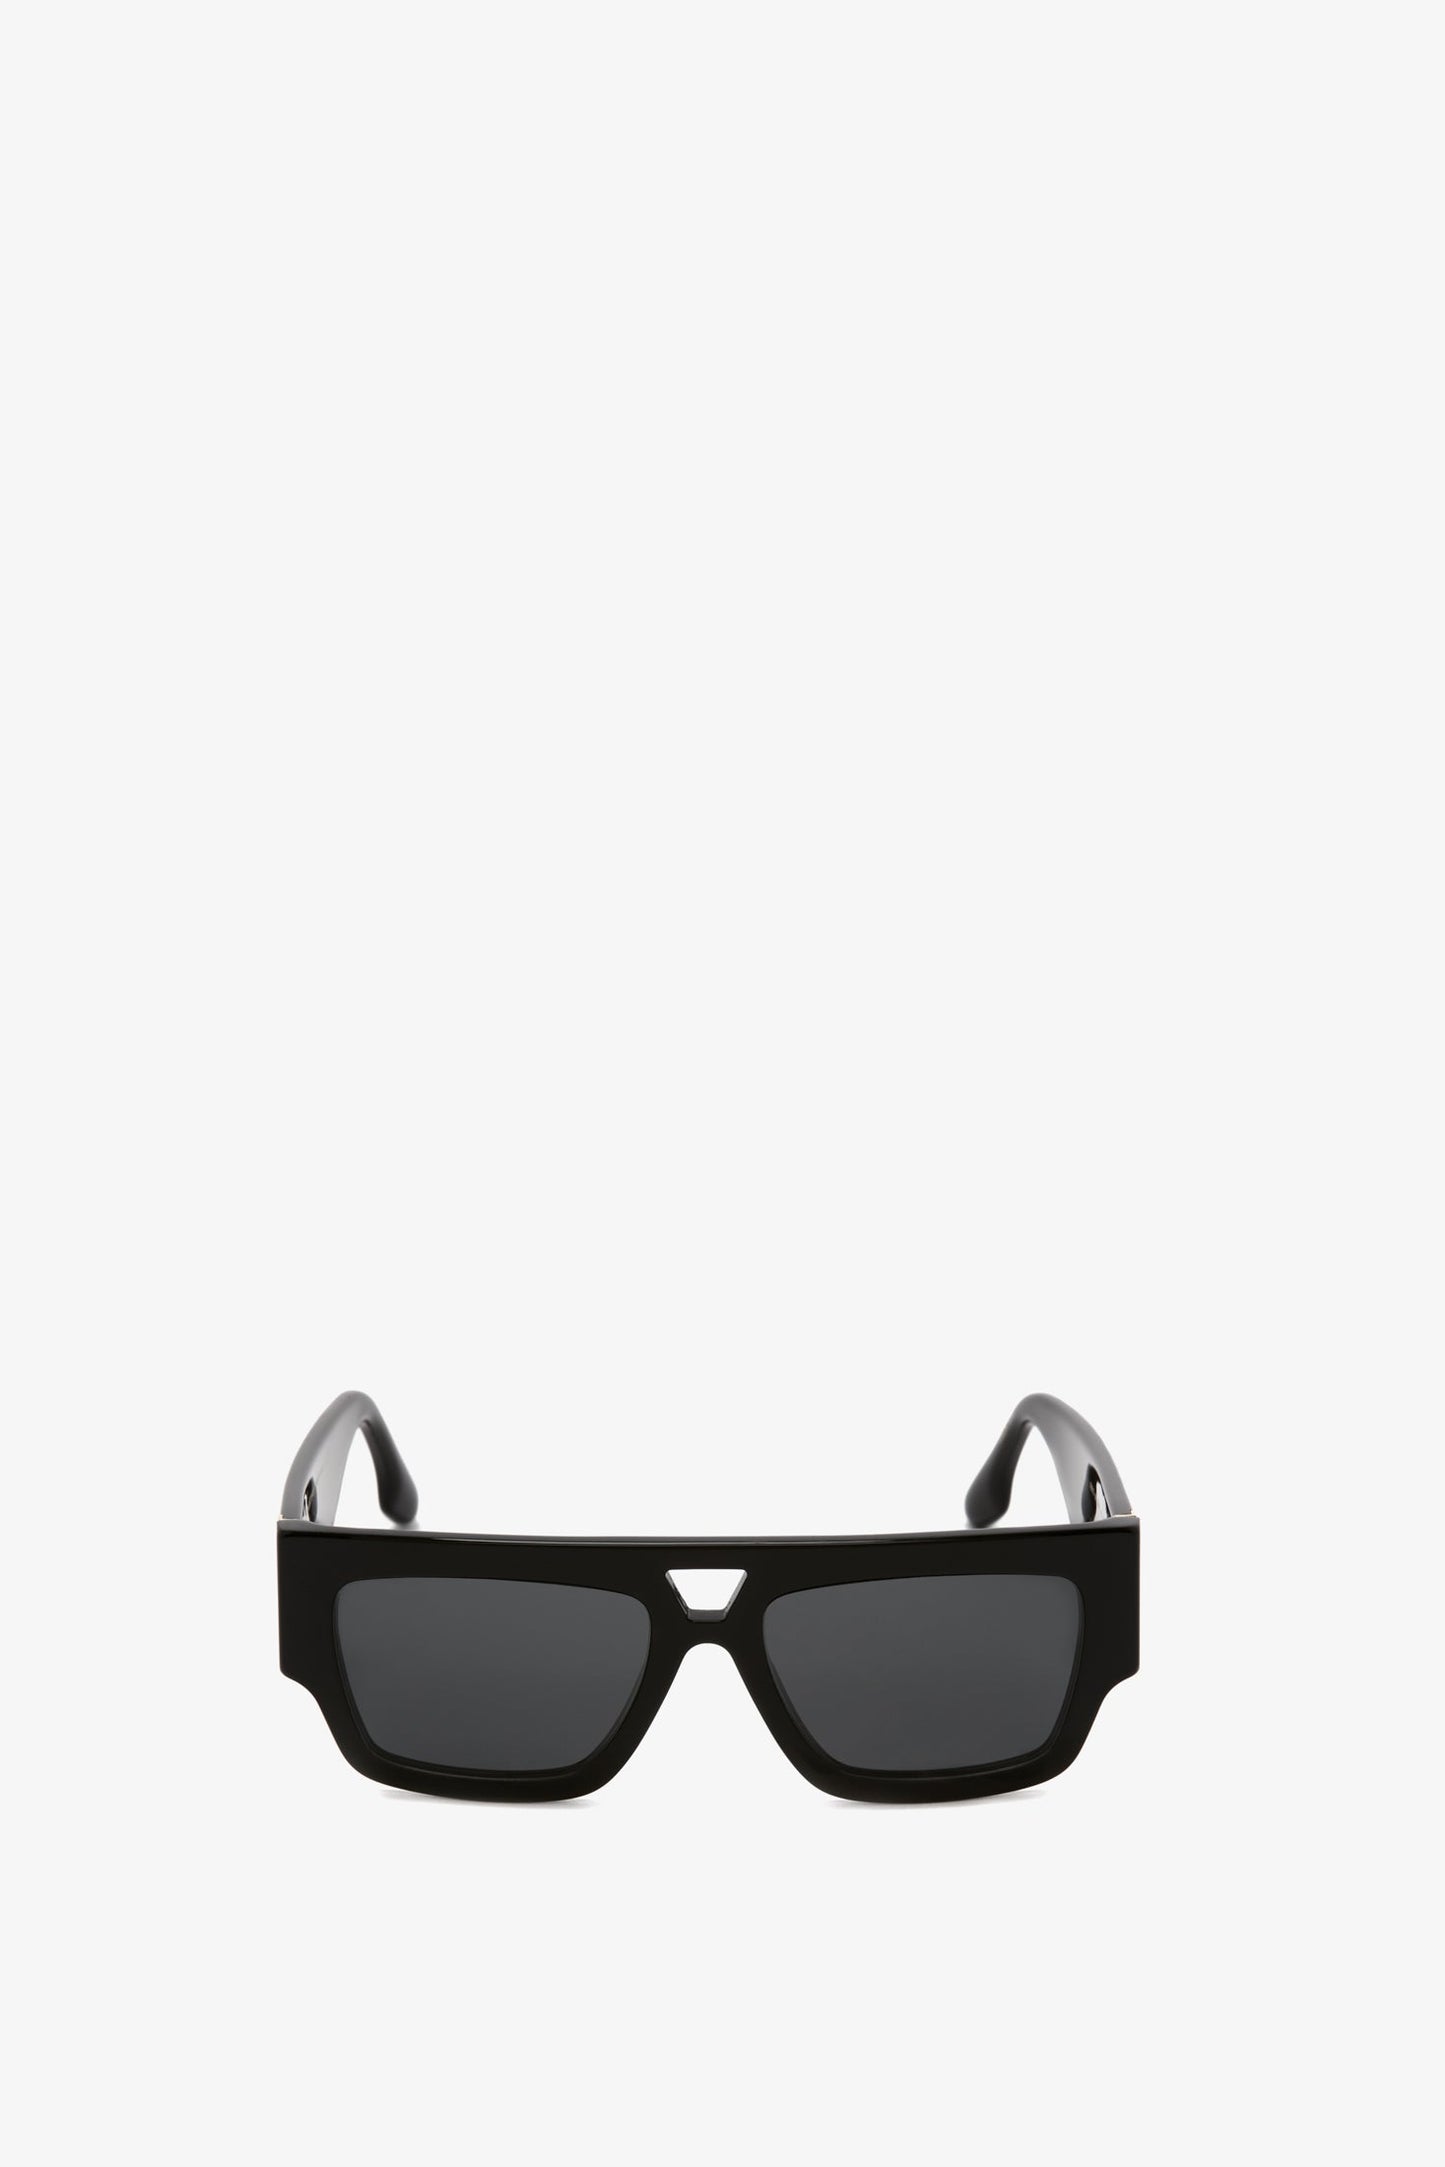 Victoria Beckham V Plaque Frame Sunglasses in Black Onesize